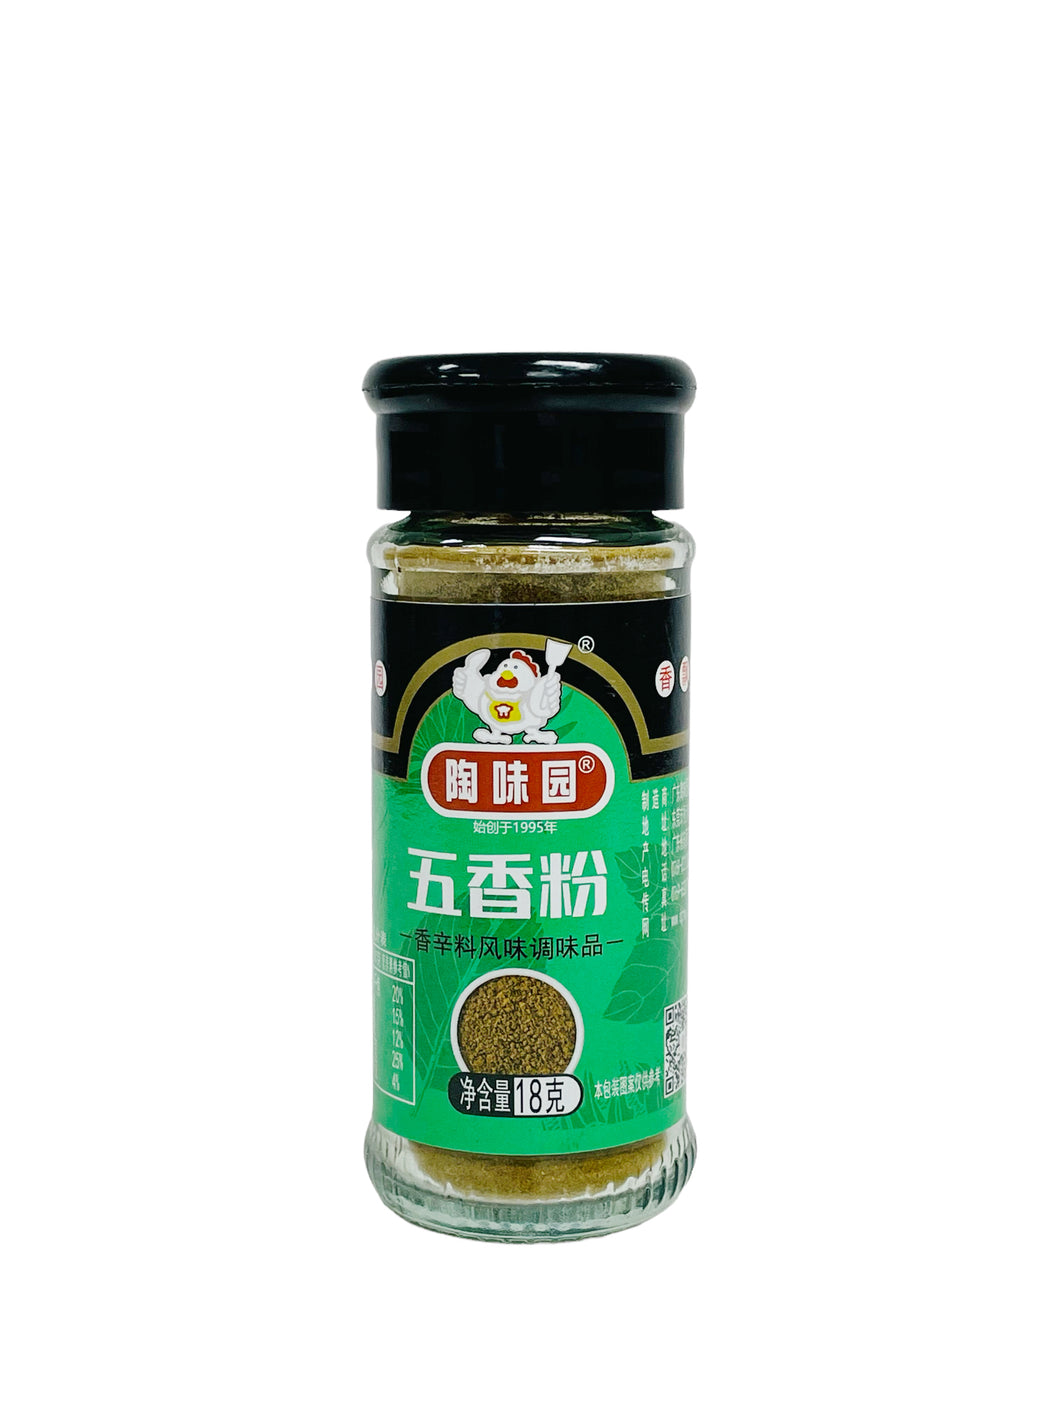 TWY Five Spice Seasoning 18g 陶味源五香粉